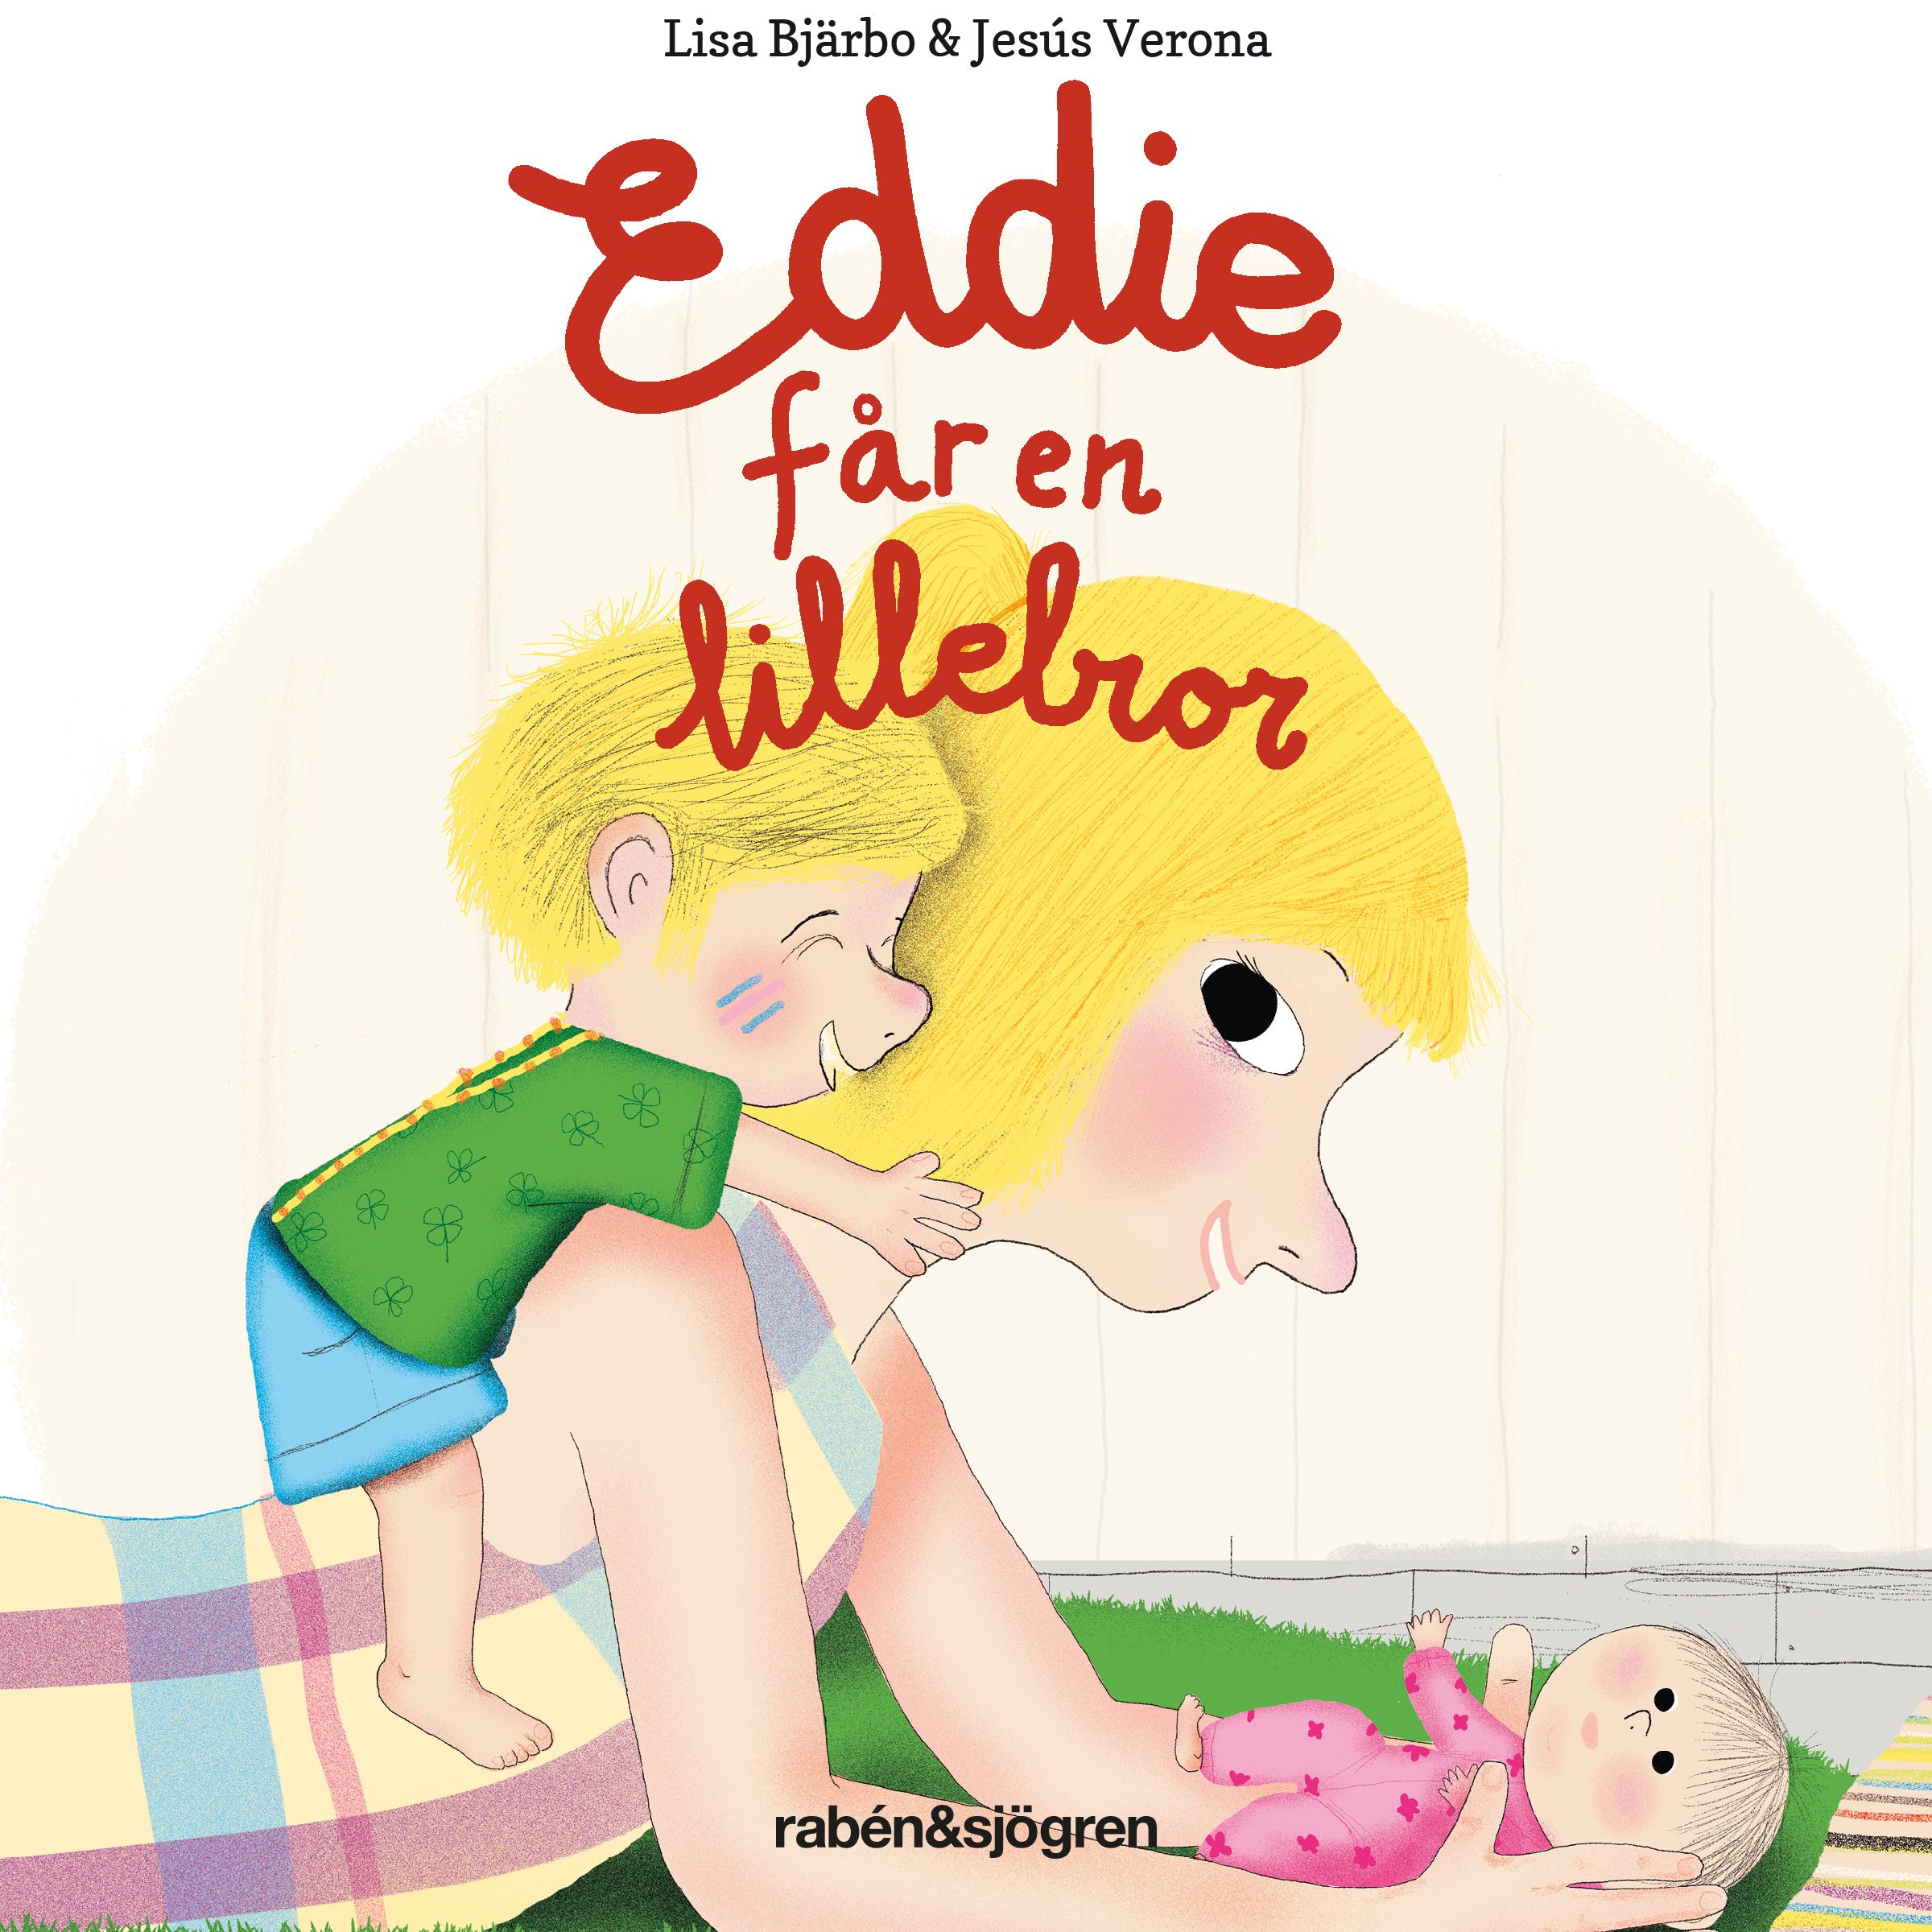 Eddie får en lillebror, audiobook by Lisa Bjärbo